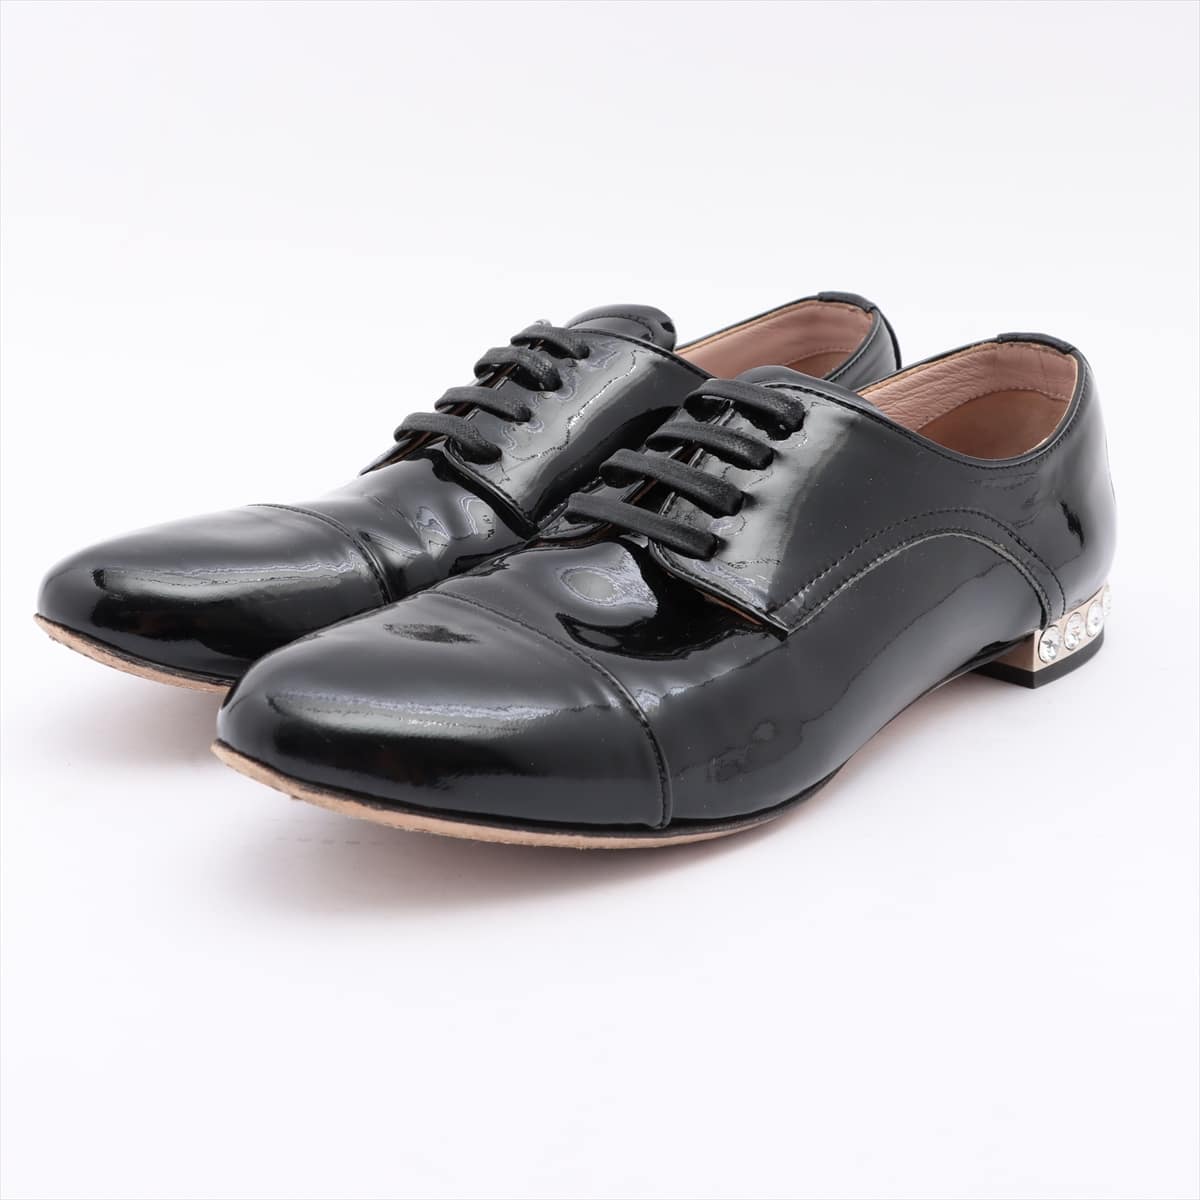 Miu Miu Patent leather Leather shoes 36 Ladies' Black Bijou